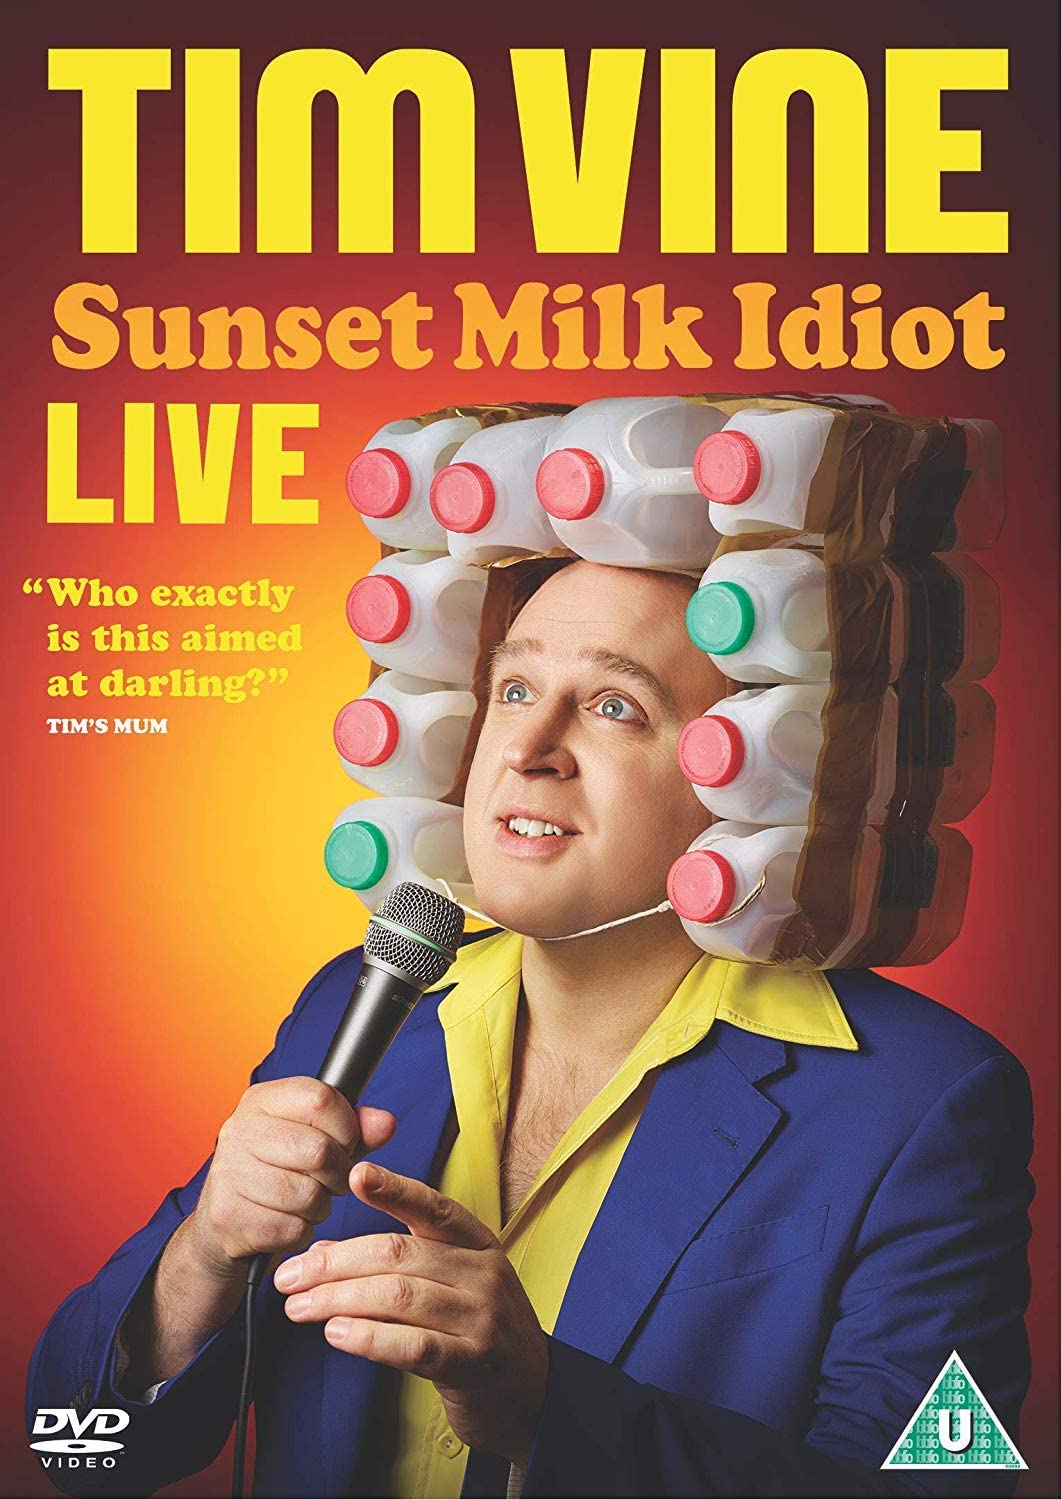 Tim Vine - Sunset Milk Idiot - Comedy [DVD]